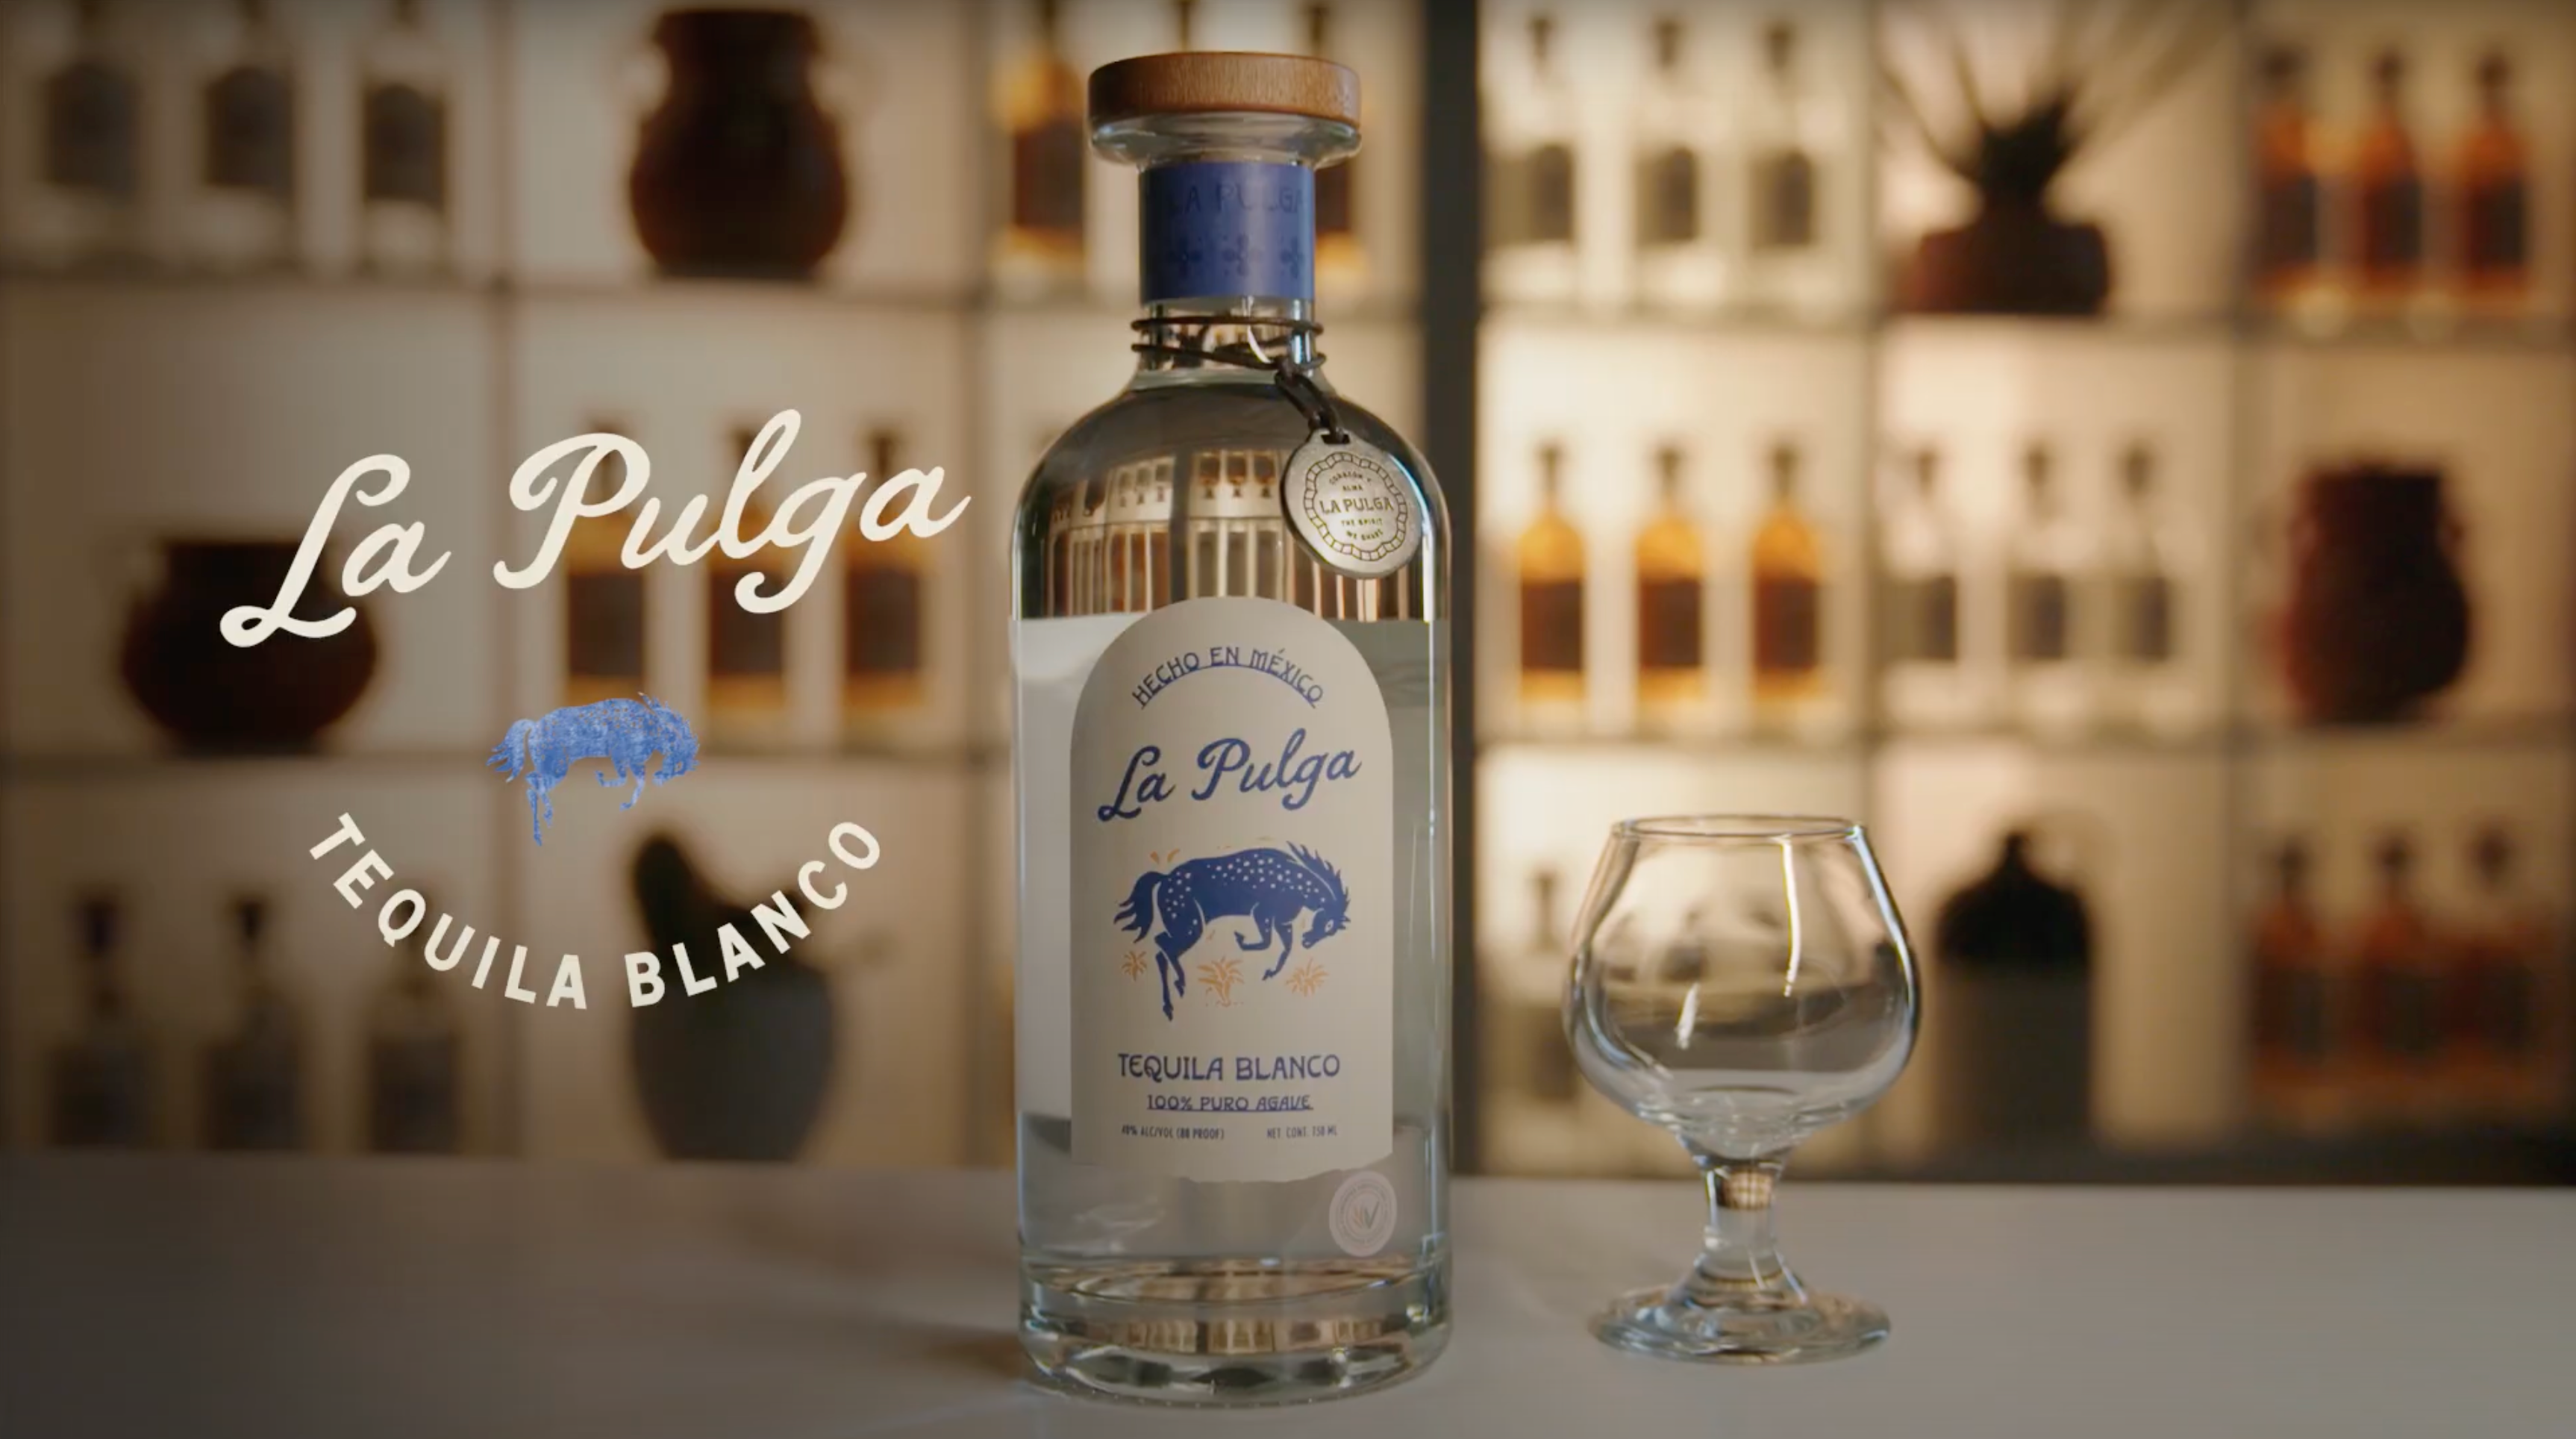 Load video: La Pulga Tequila Blanco